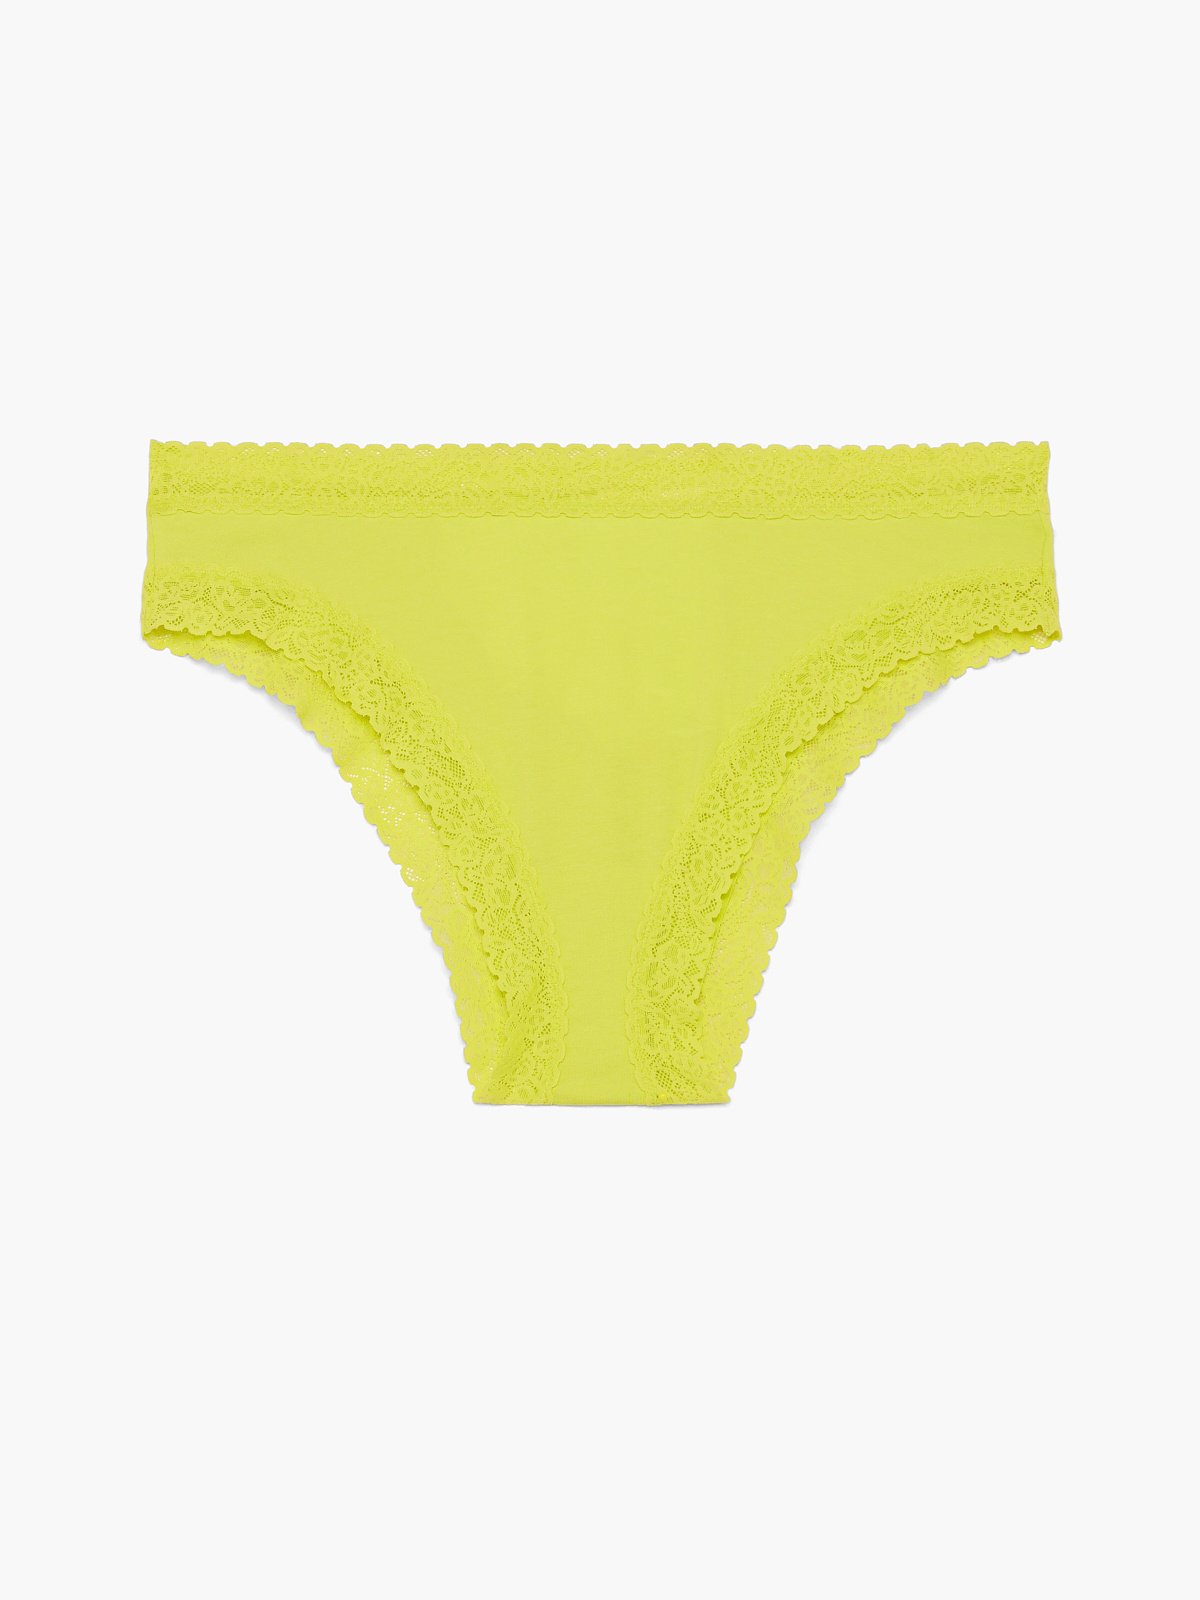 Cotton Yellow Panties, Sexy Underwear, Organic Lingerie, Cotton